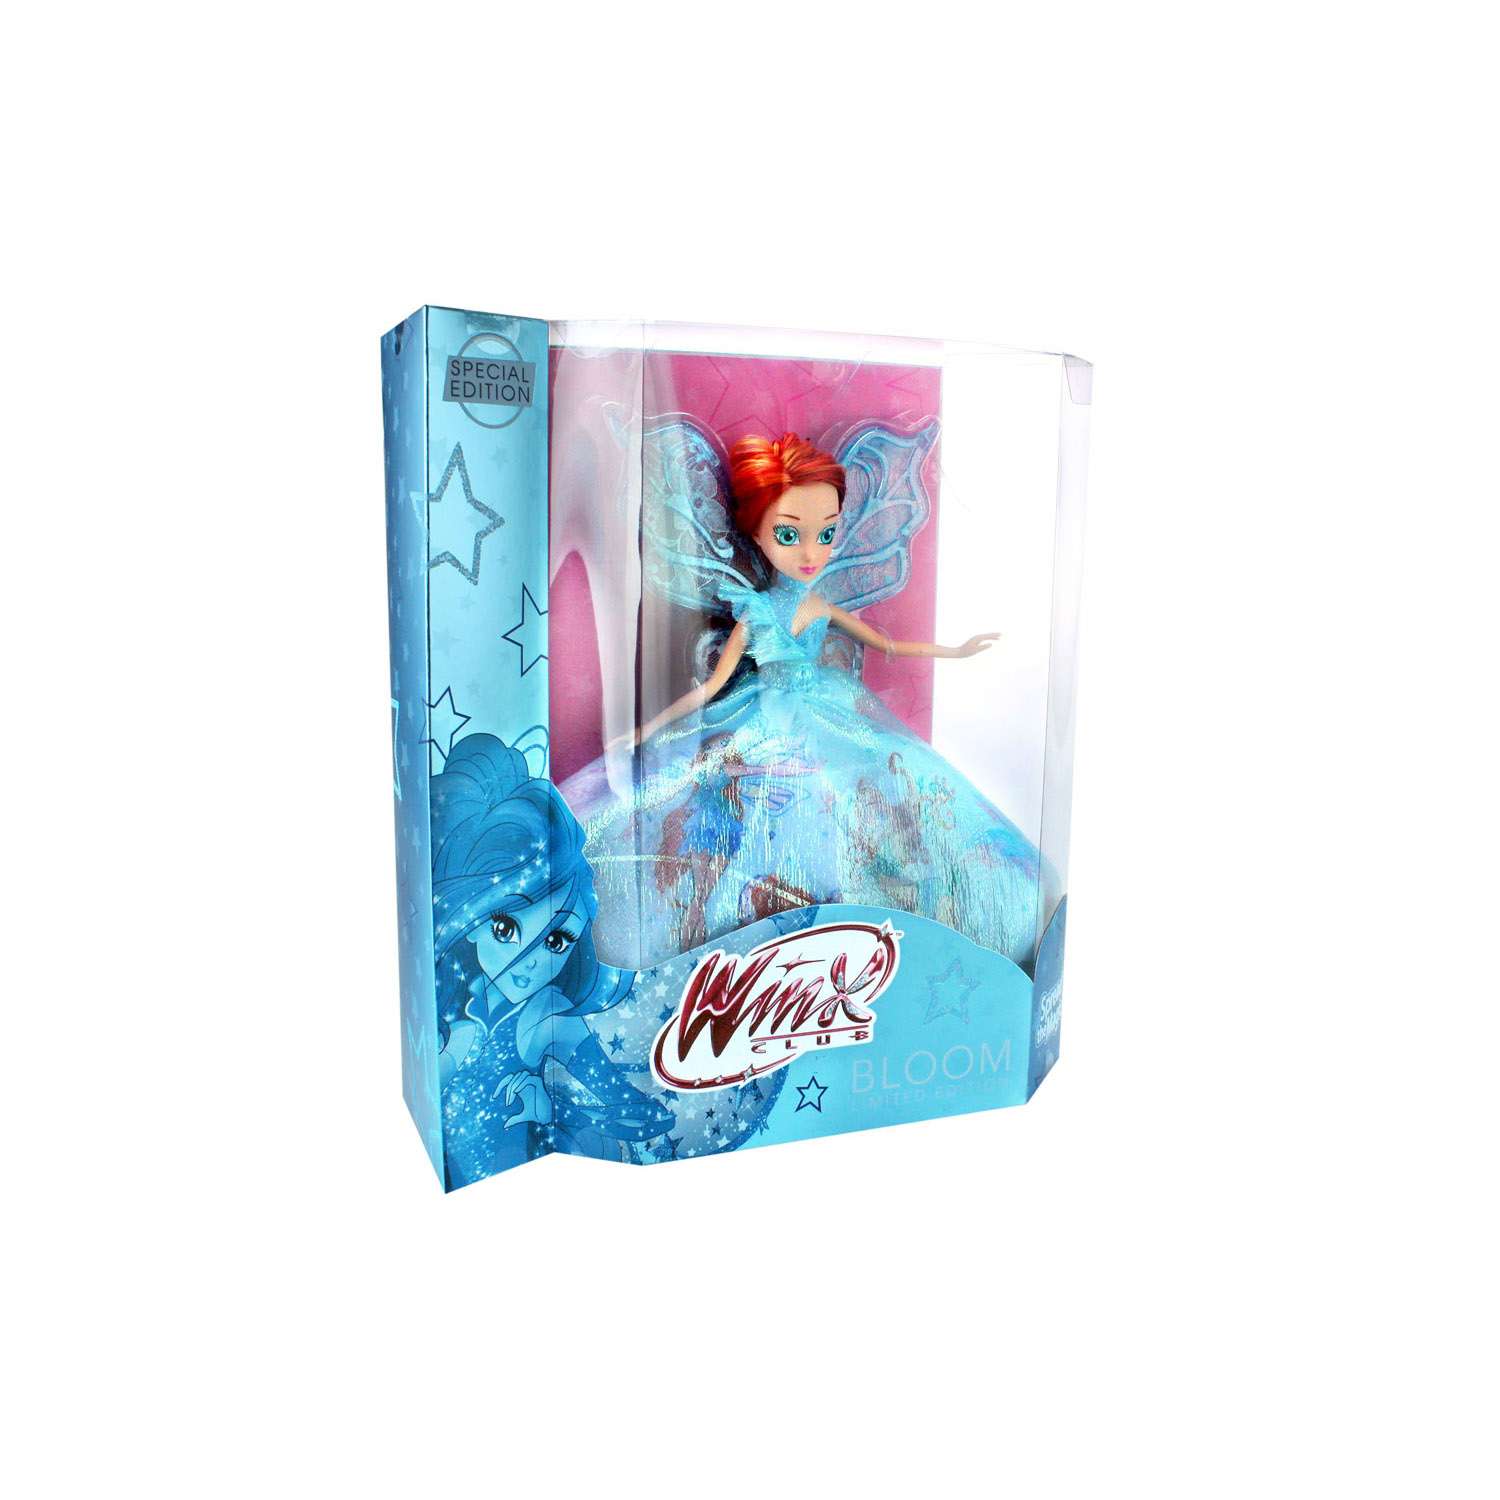 Кукла Winx Блум limited edition IW01071900 - фото 2